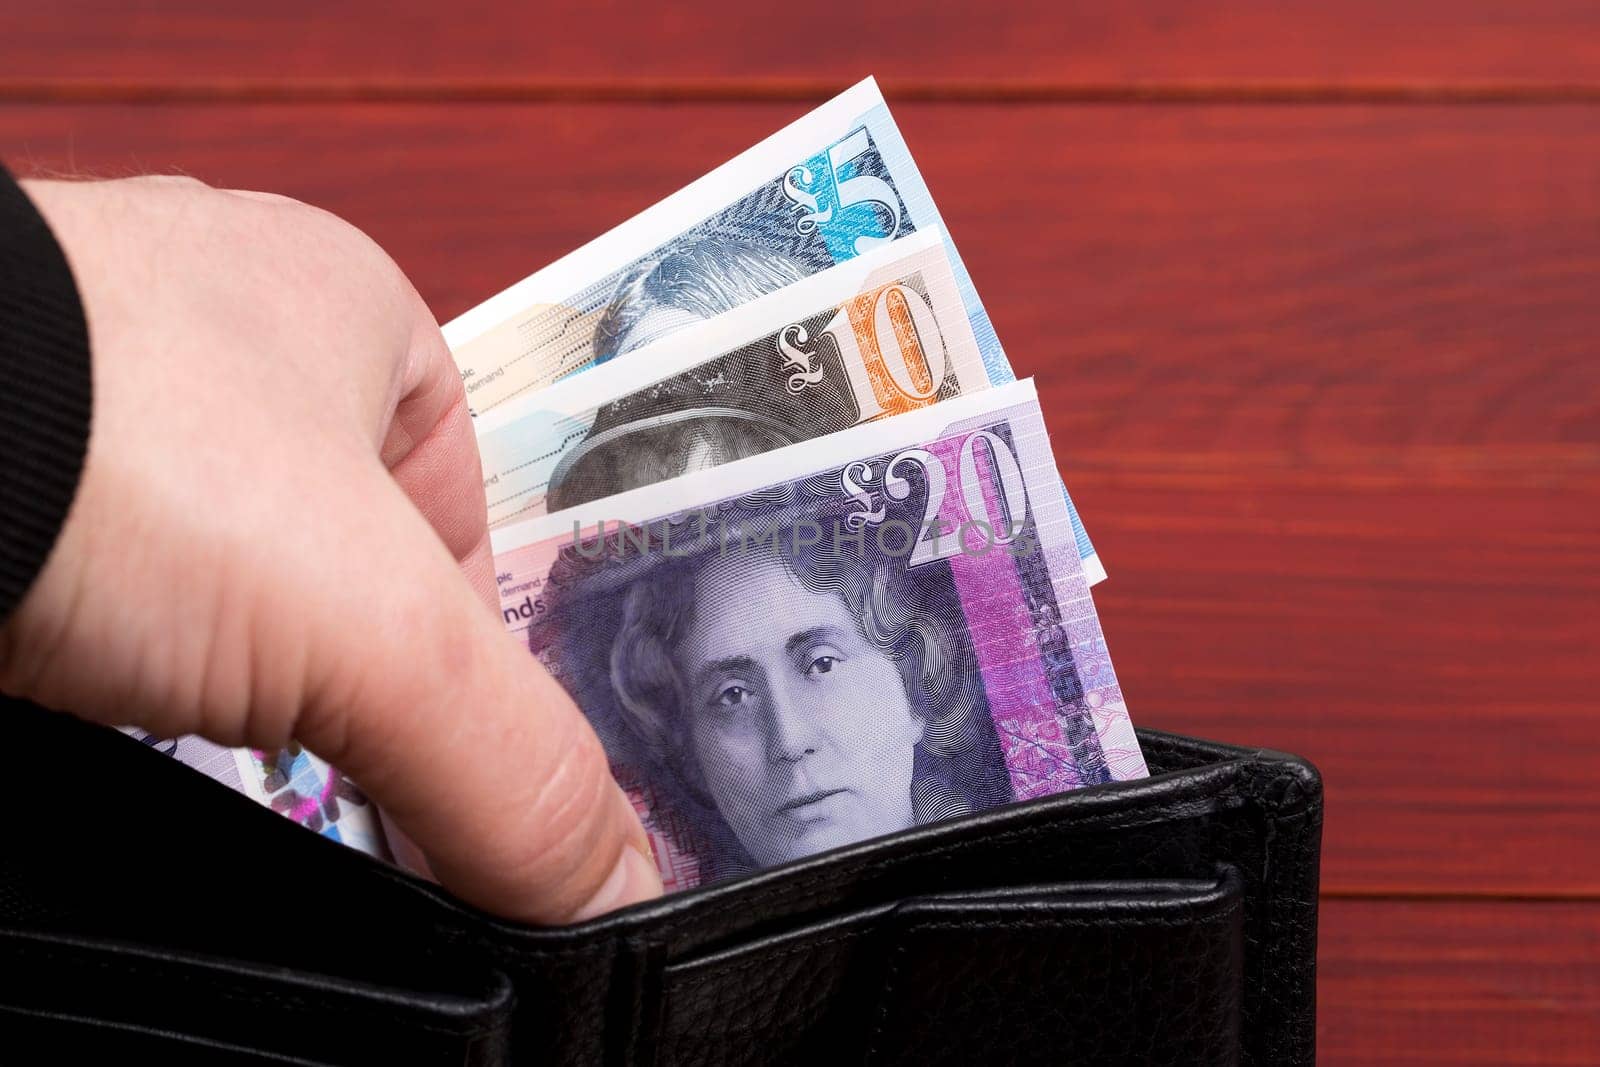 Scottish money - Pound in the black wallet by johan10